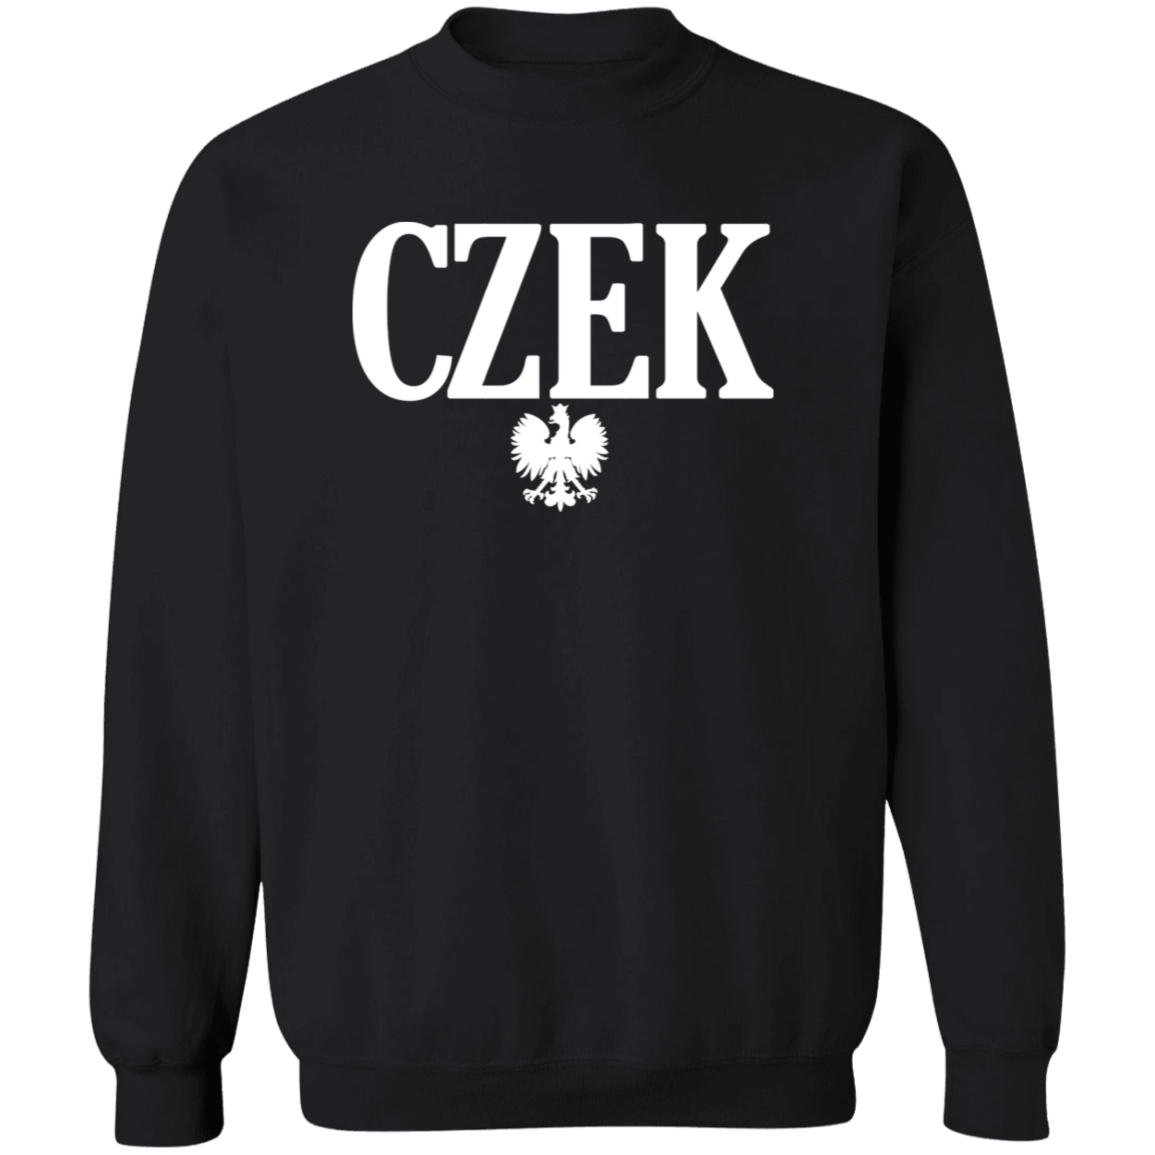 CZEK Polish Surname Ending Apparel CustomCat G180 Crewneck Pullover Sweatshirt Black S